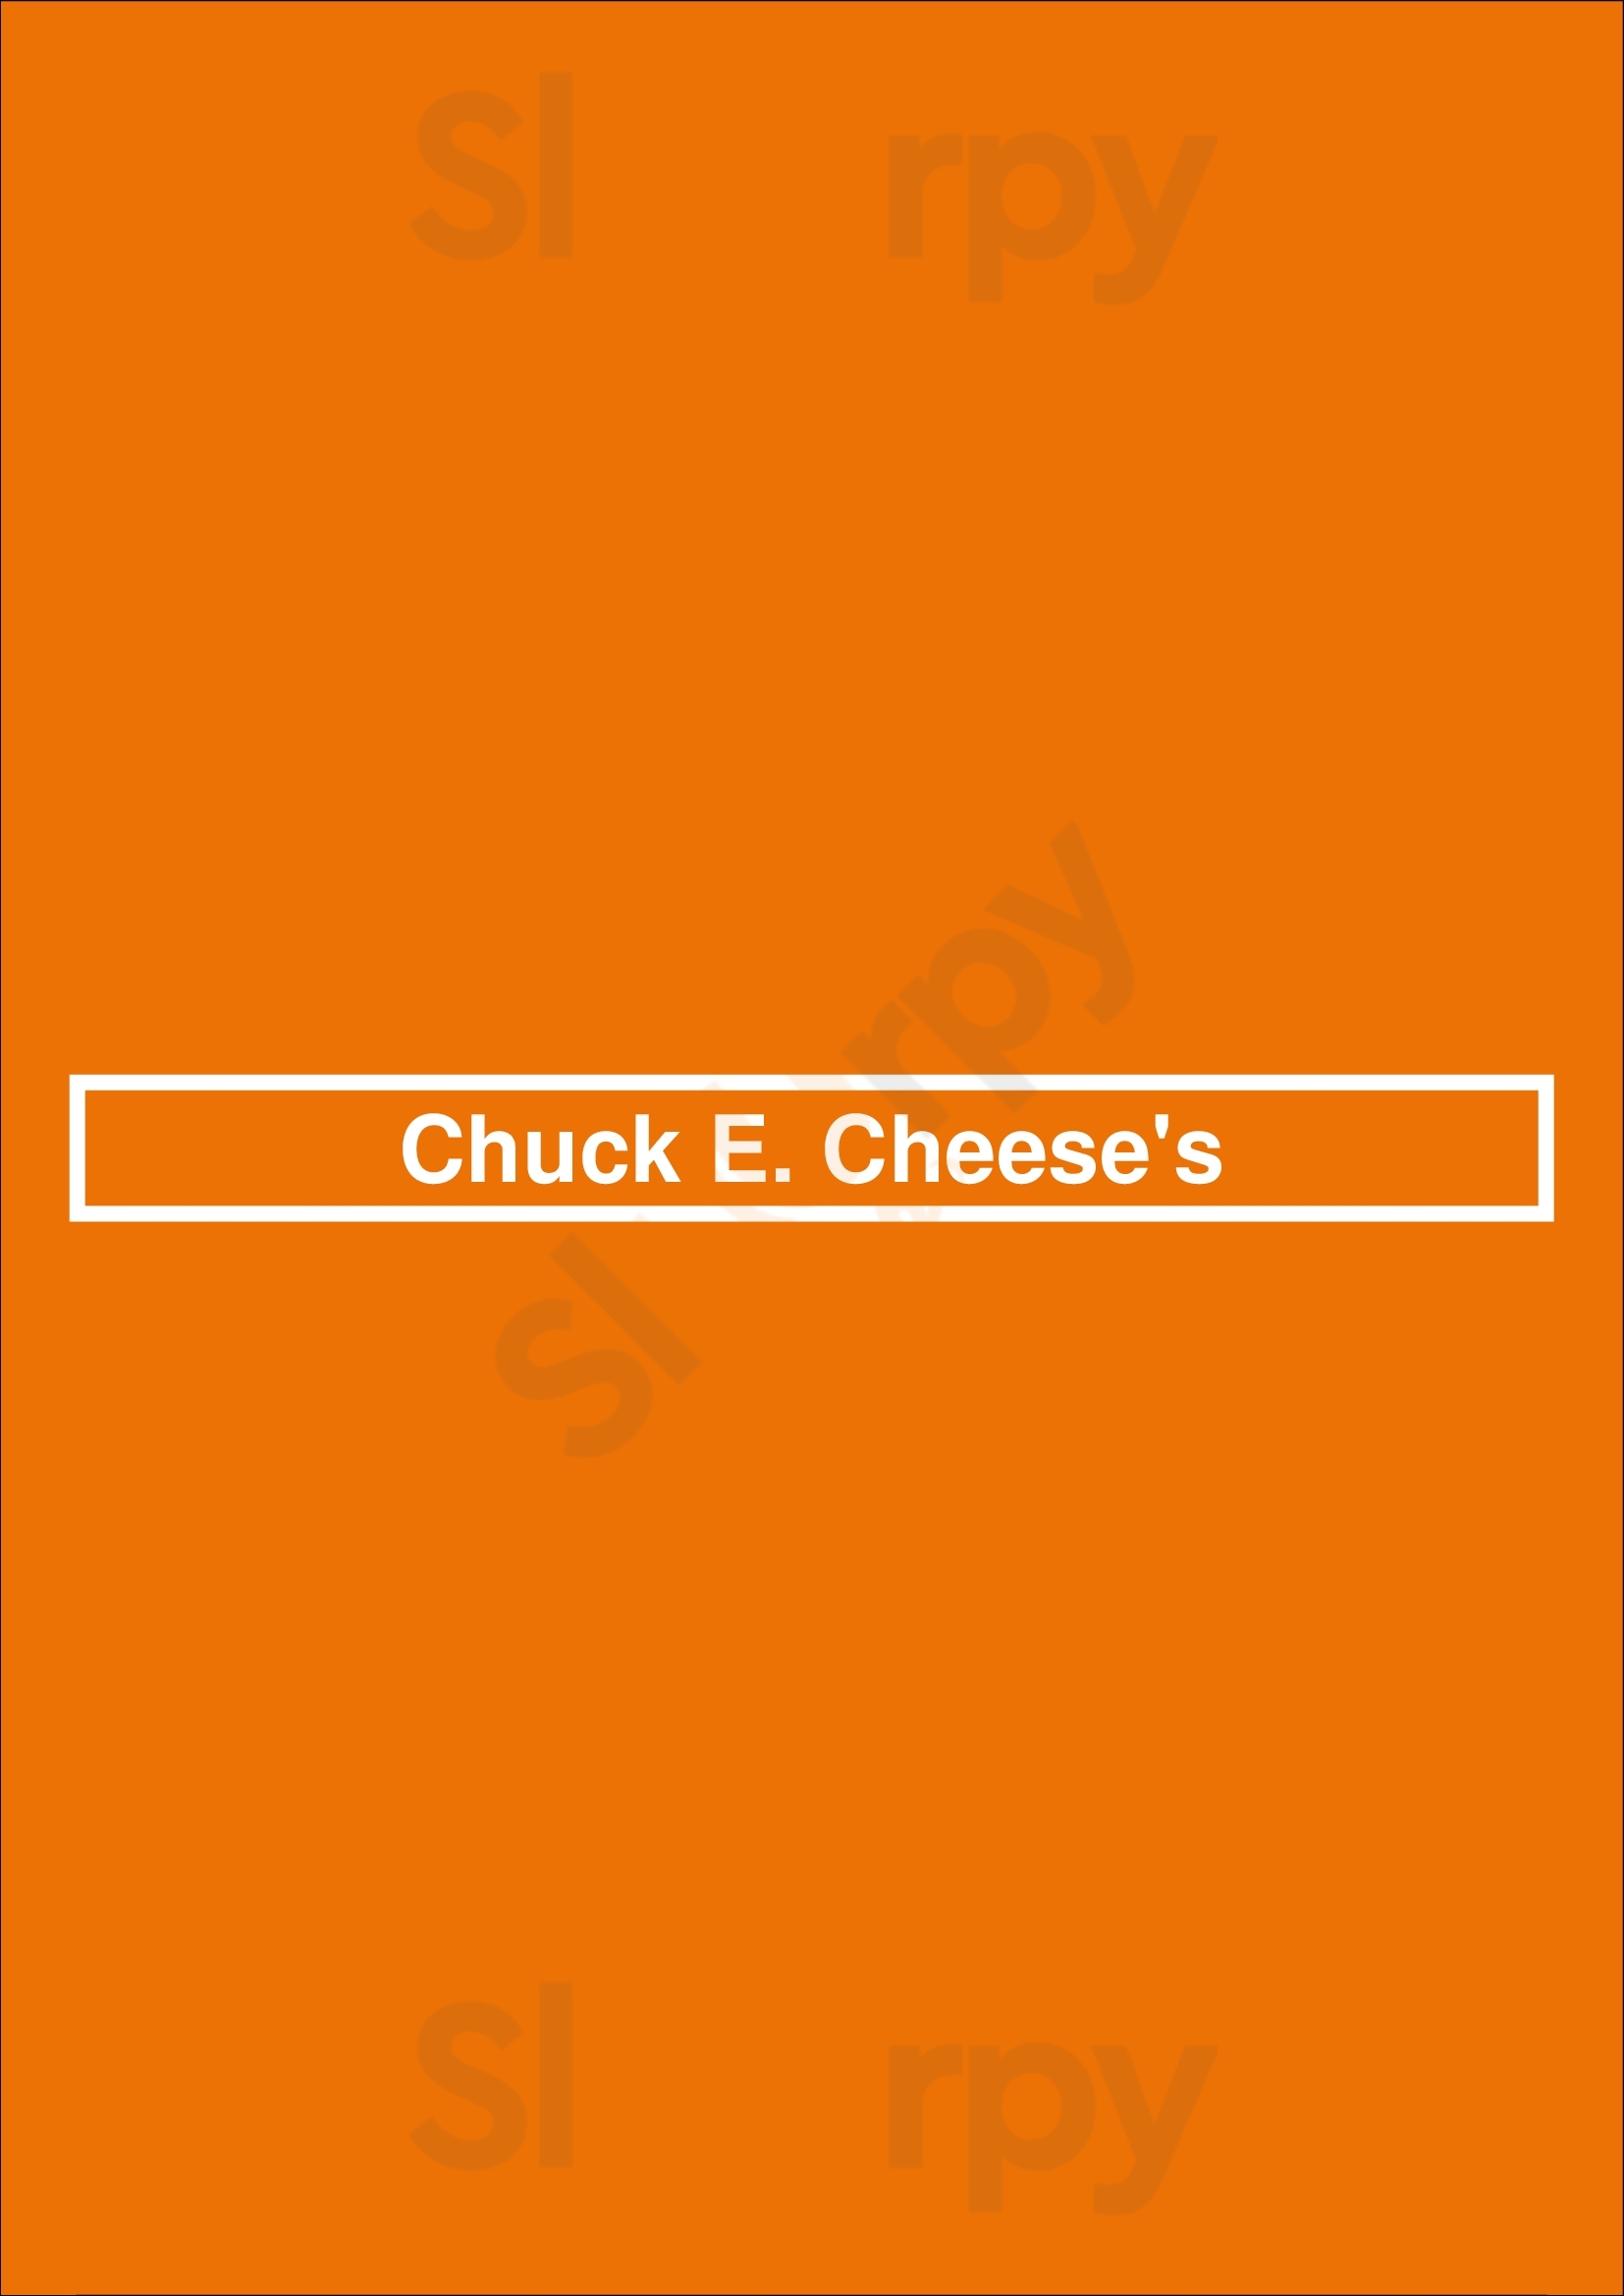 Chuck E. Cheese Alexandria Menu - 1